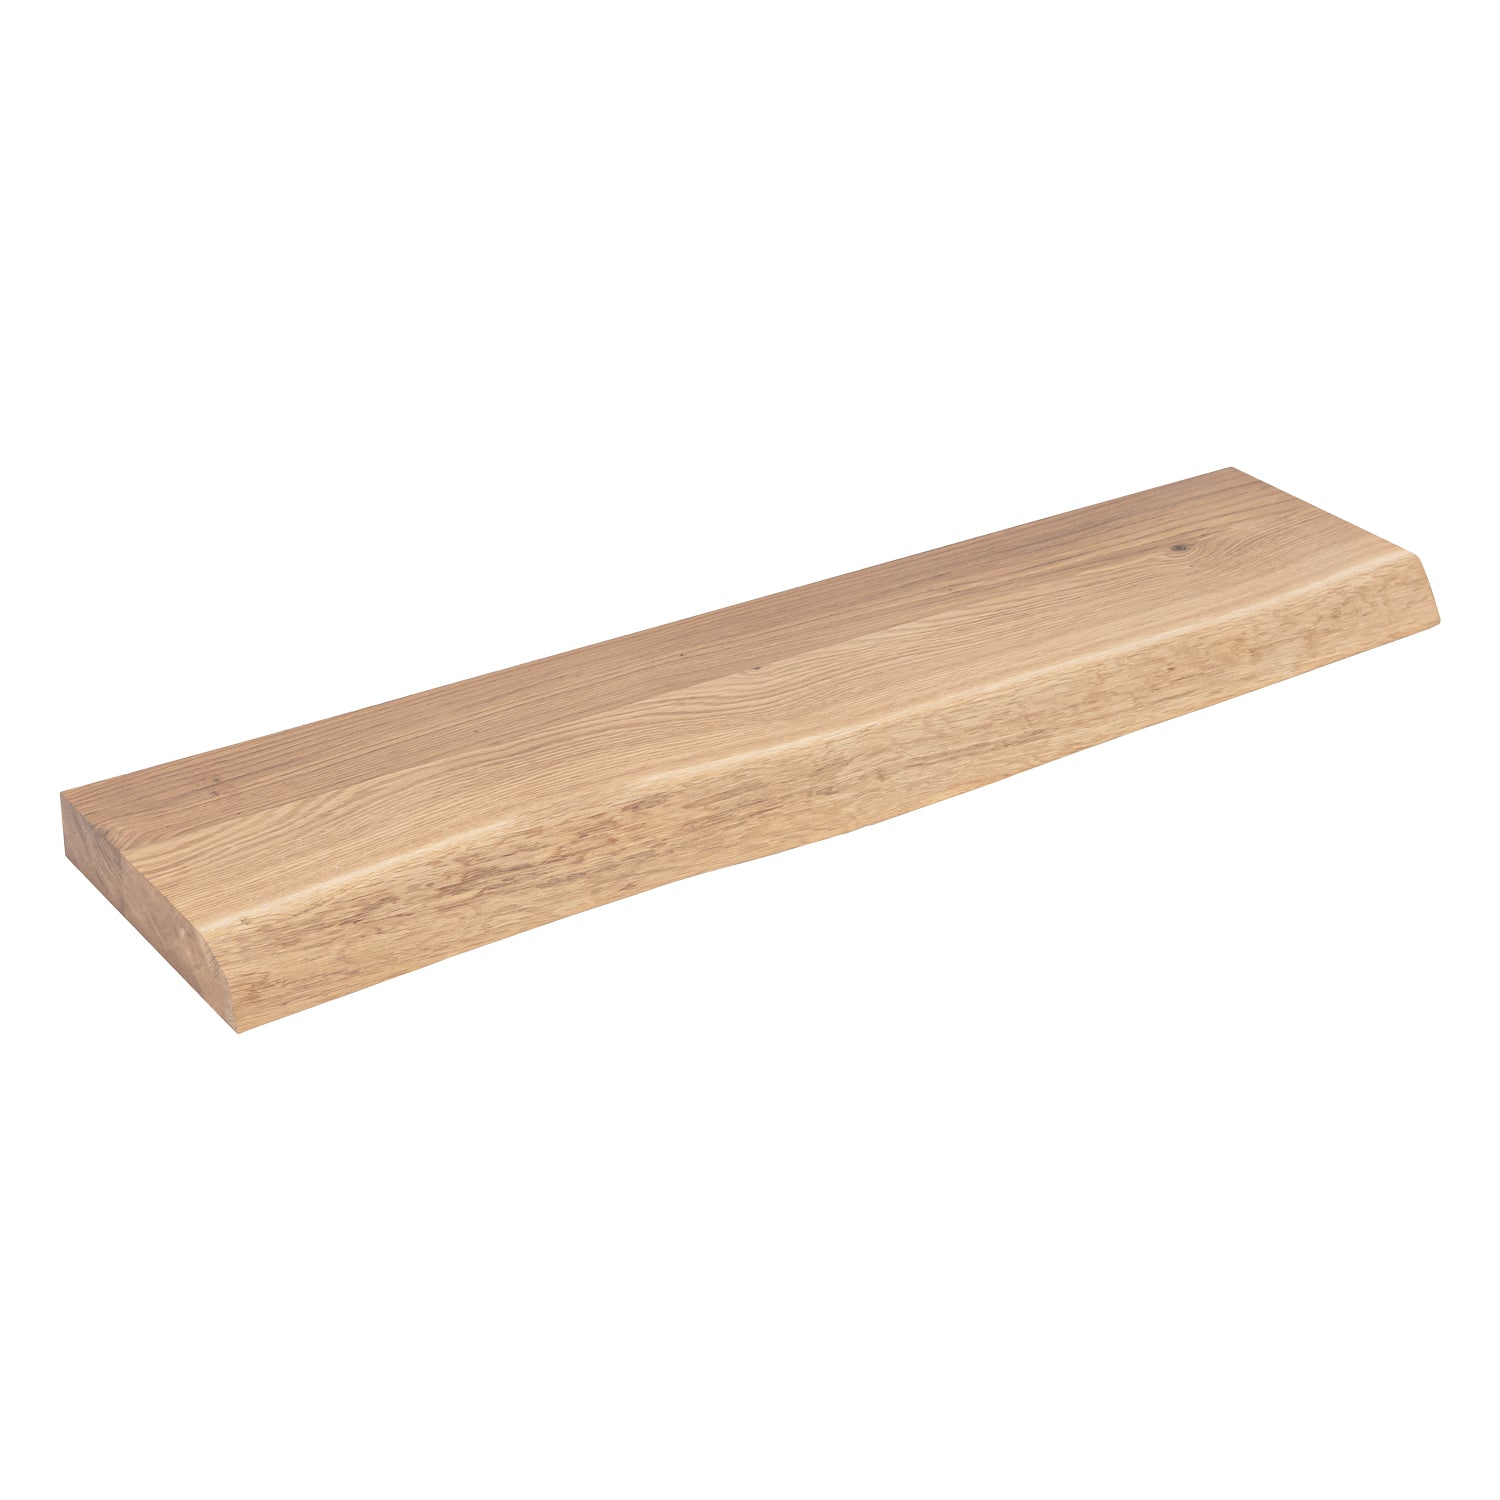 Solid Oak Live Edge Shelf (Sanded) - 40mm thick